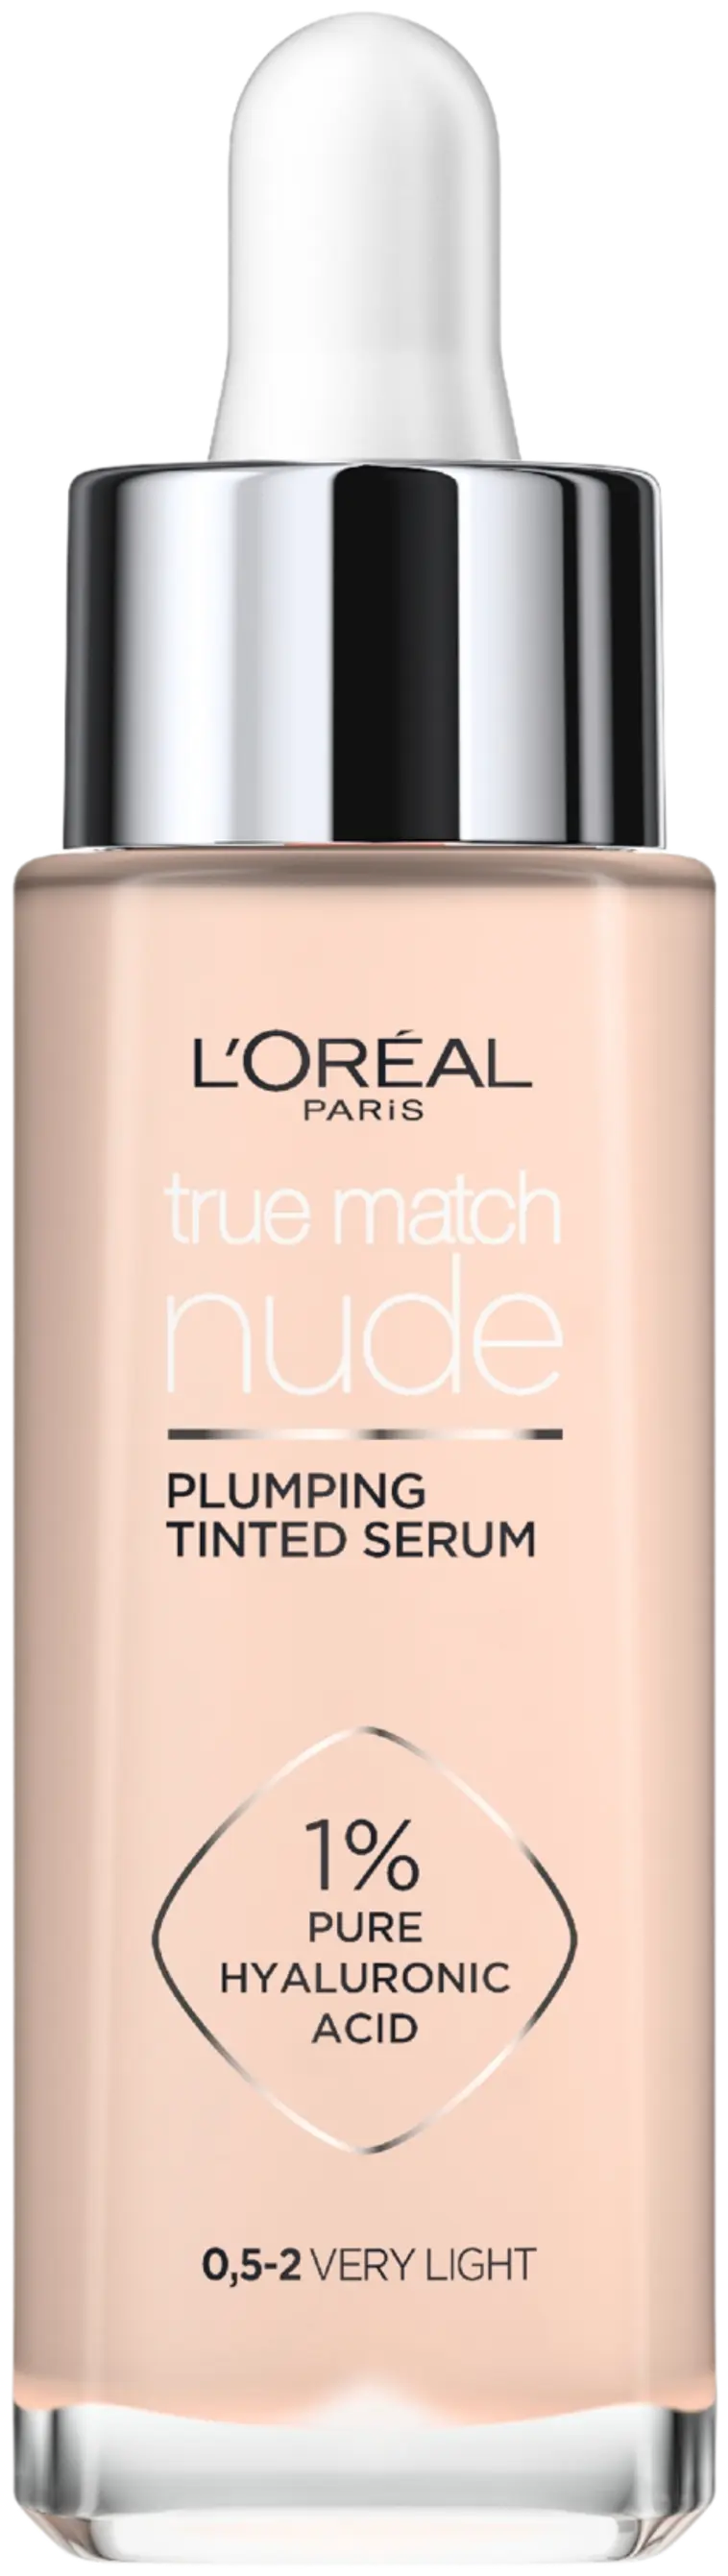 L'Oréal Paris True Match Nude Plumping Tinted Serum  0,5-2 Very Light -meikkivoide 30 ml - 0,5-2 Very Light - 1